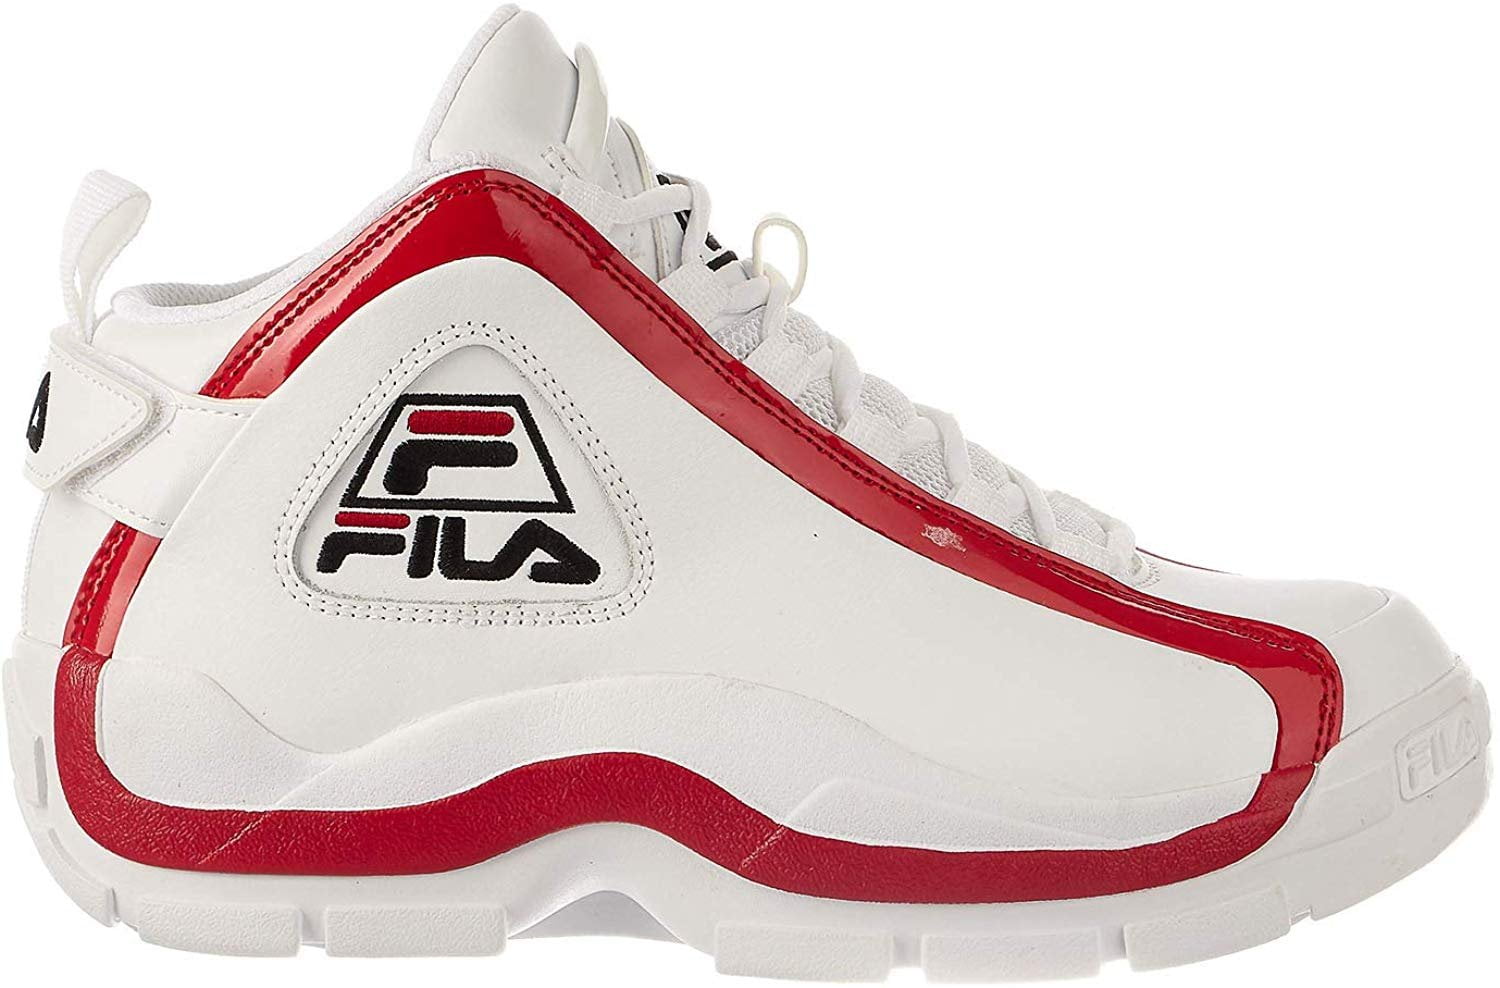 FILA - Fila Men’s Grant Hill 2 Sneakers (12 D(M) US, White/Fila Red ...